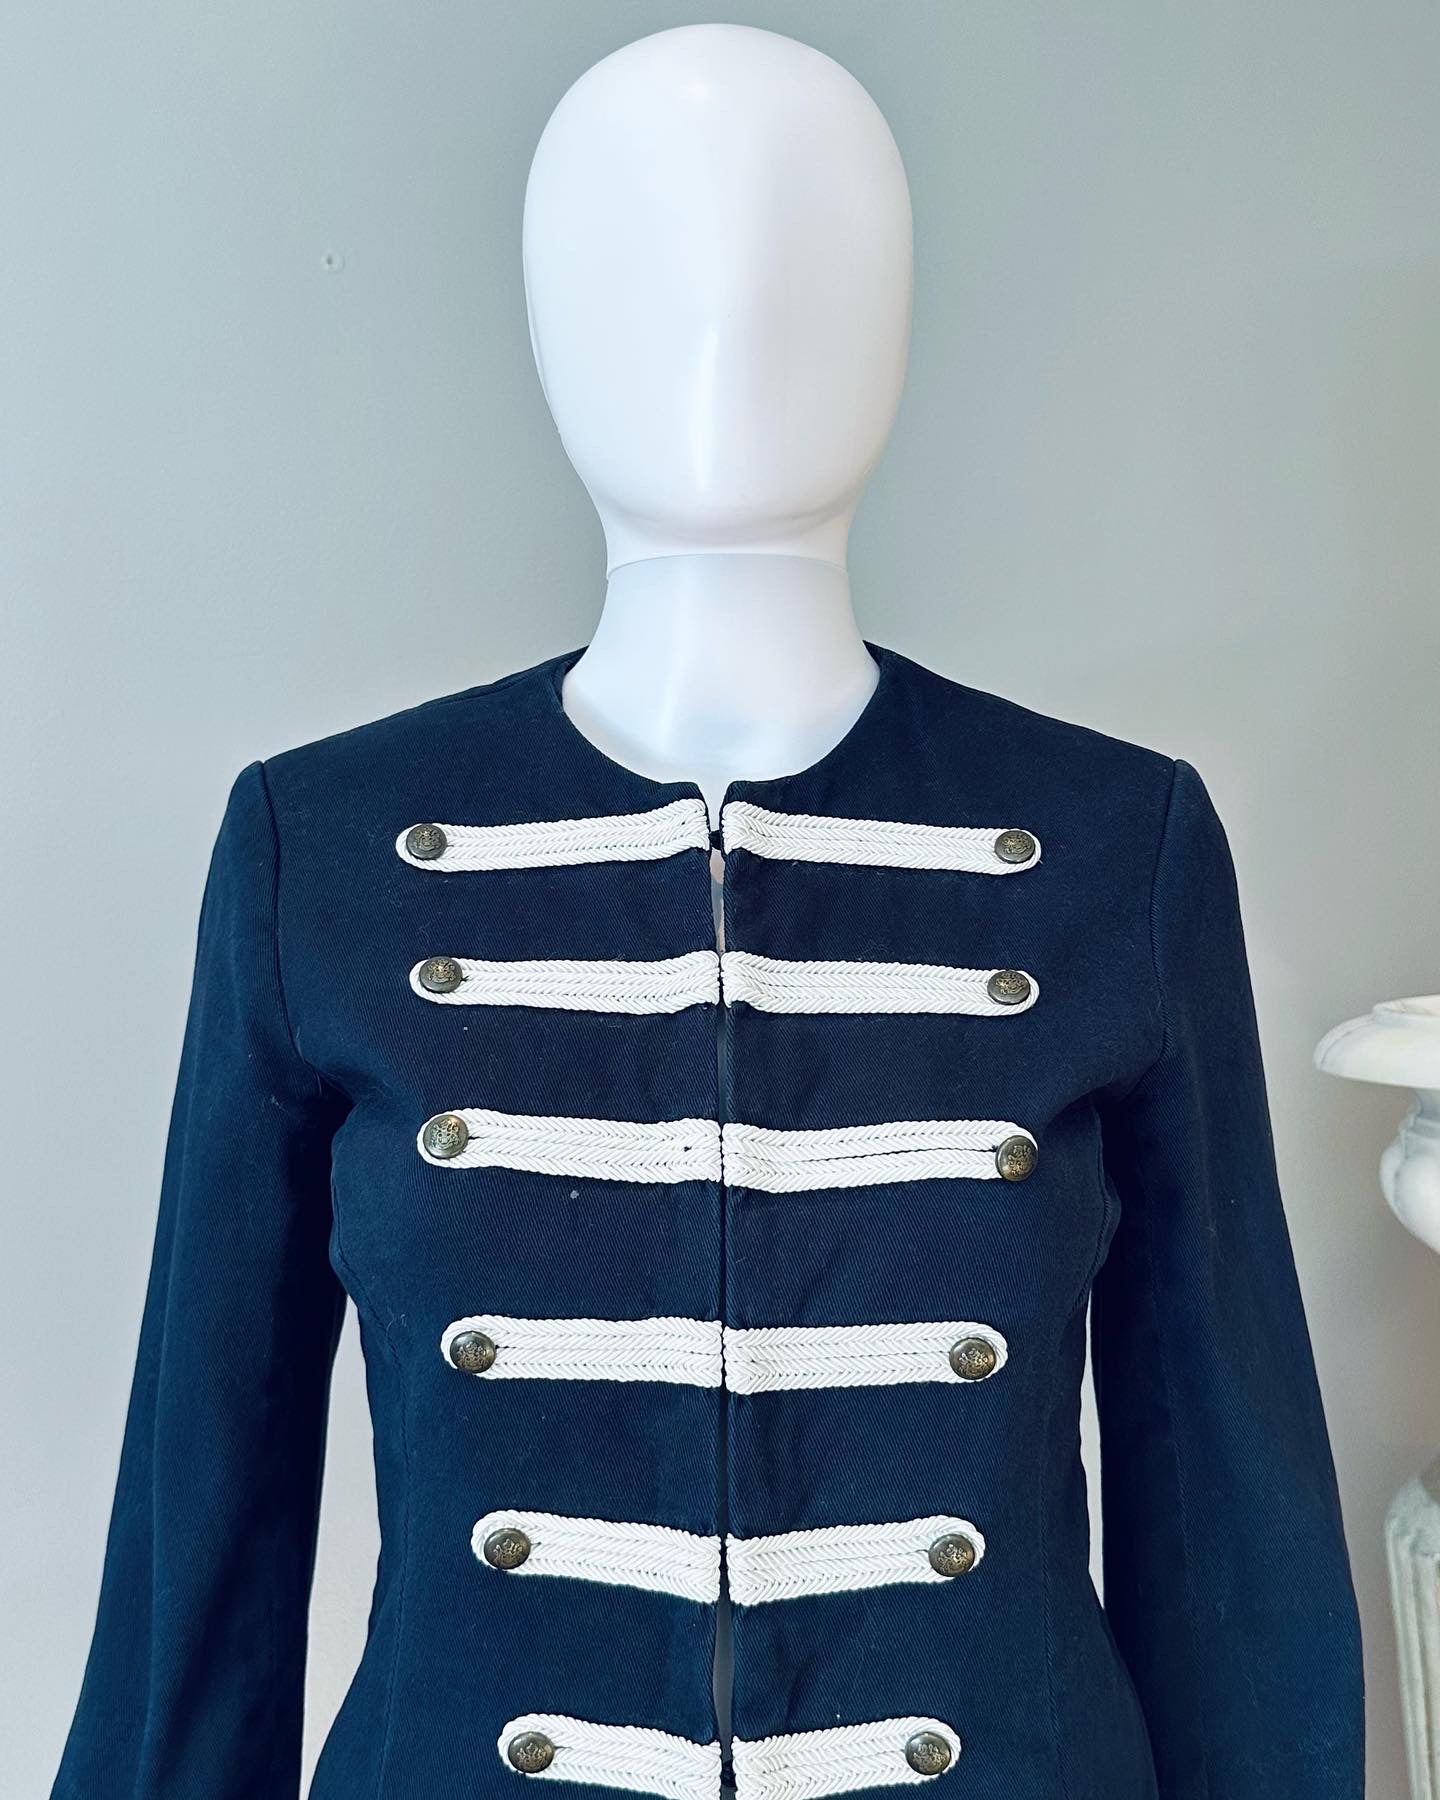 Cynthia Rowley - Chaqueta tipo blazer estilo militar azul marino